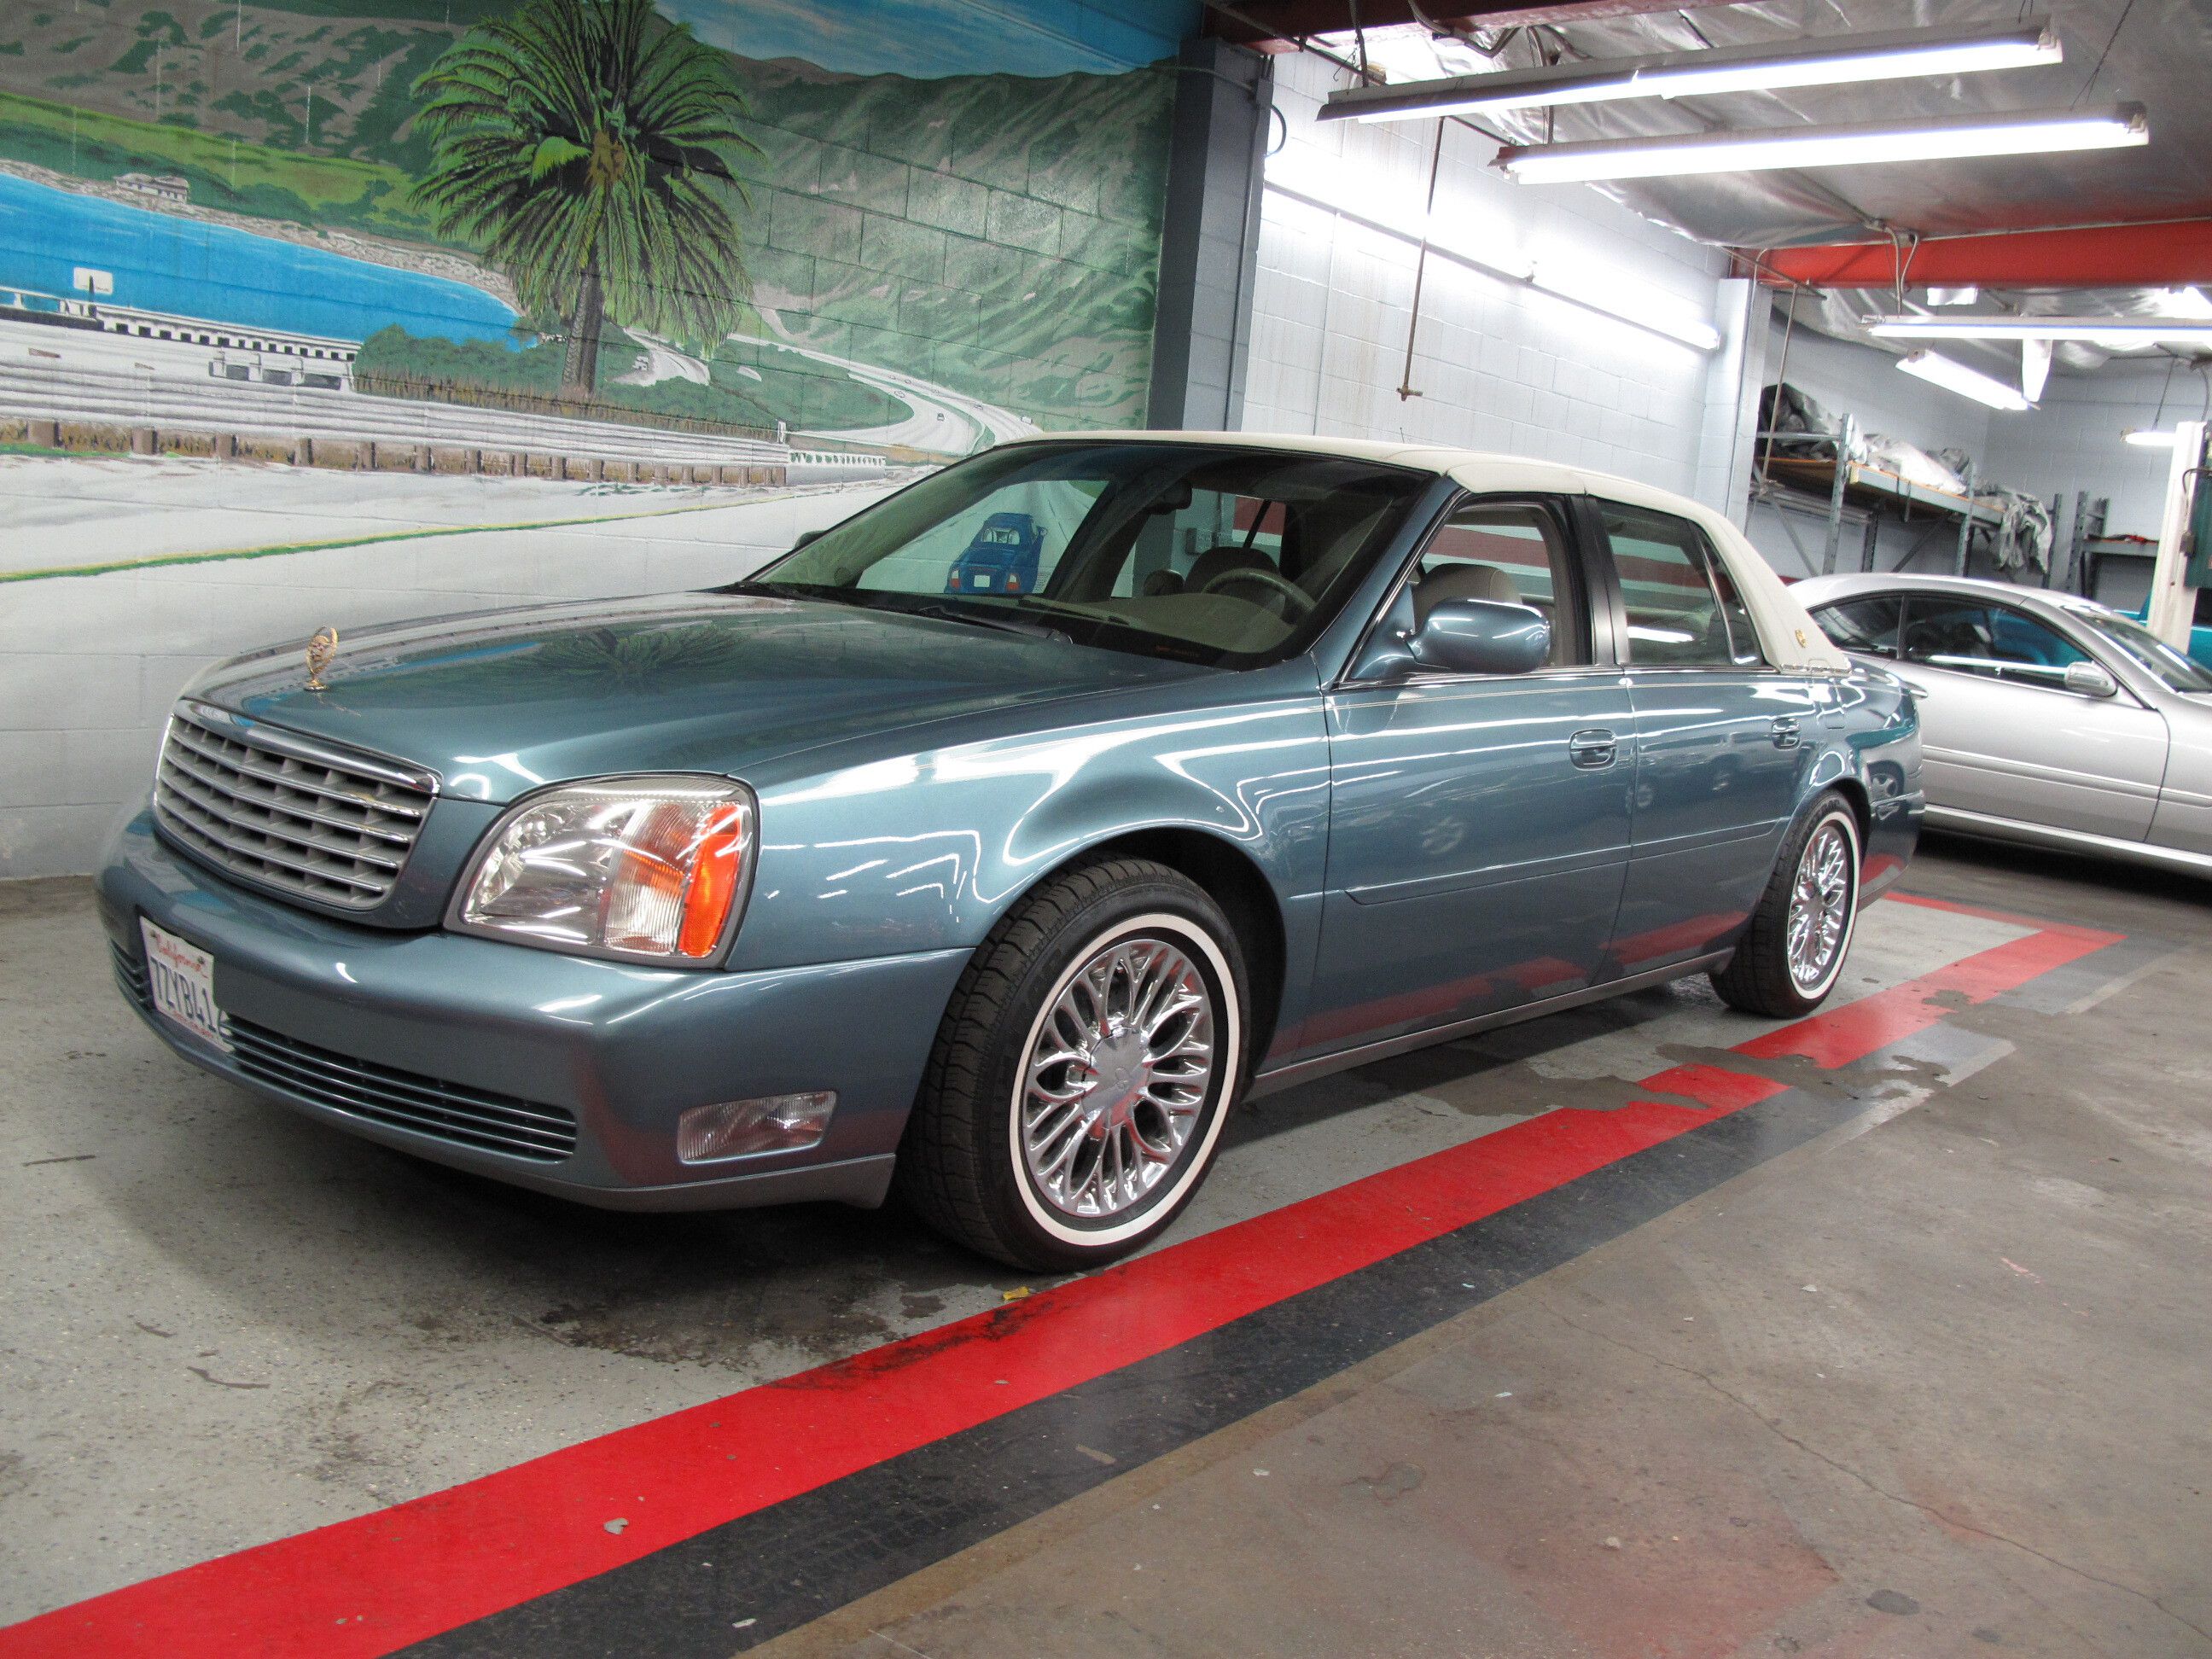 2000 Cadillac Deville Los Angeles, California | Hemmings.com